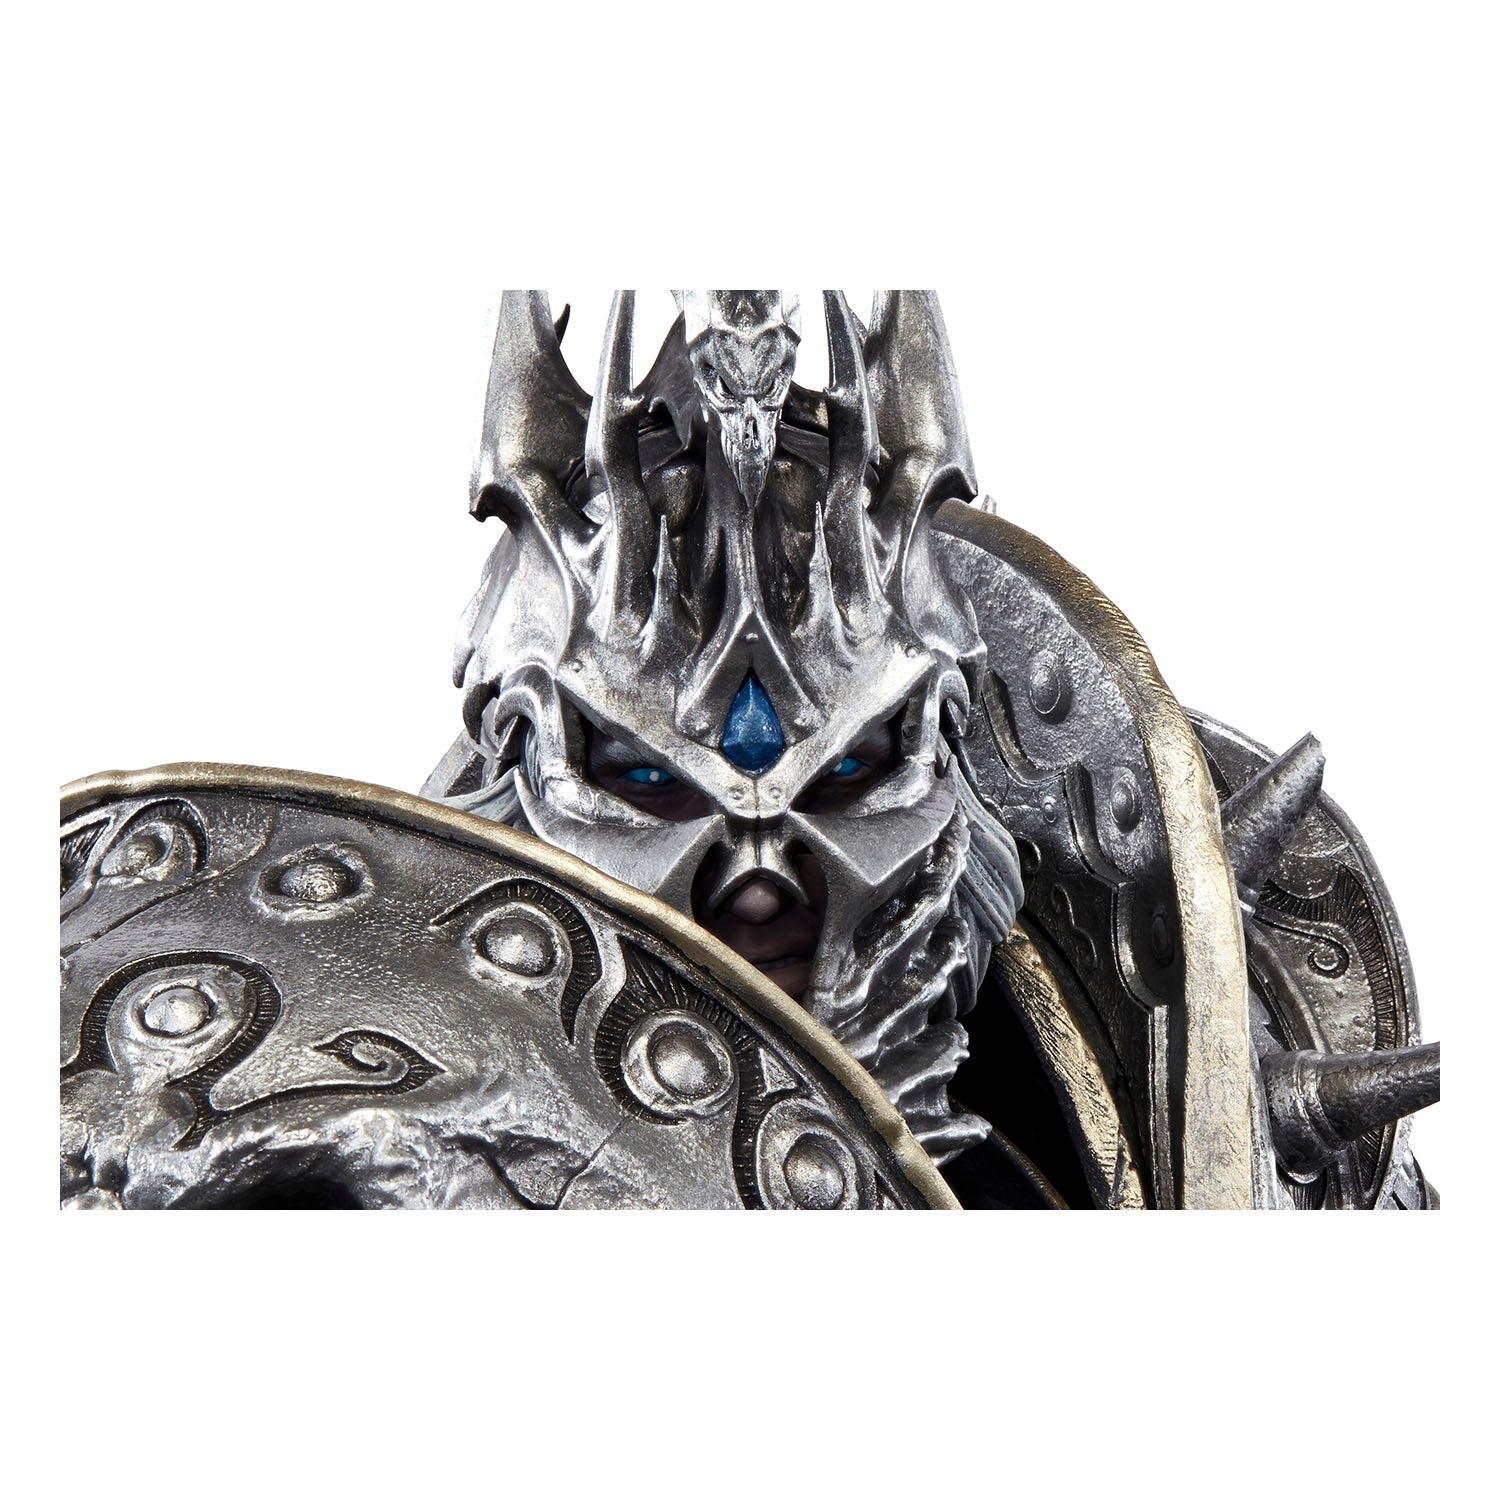 Artwork The Lich King, World of Warcraft, Blizzard Entertainment